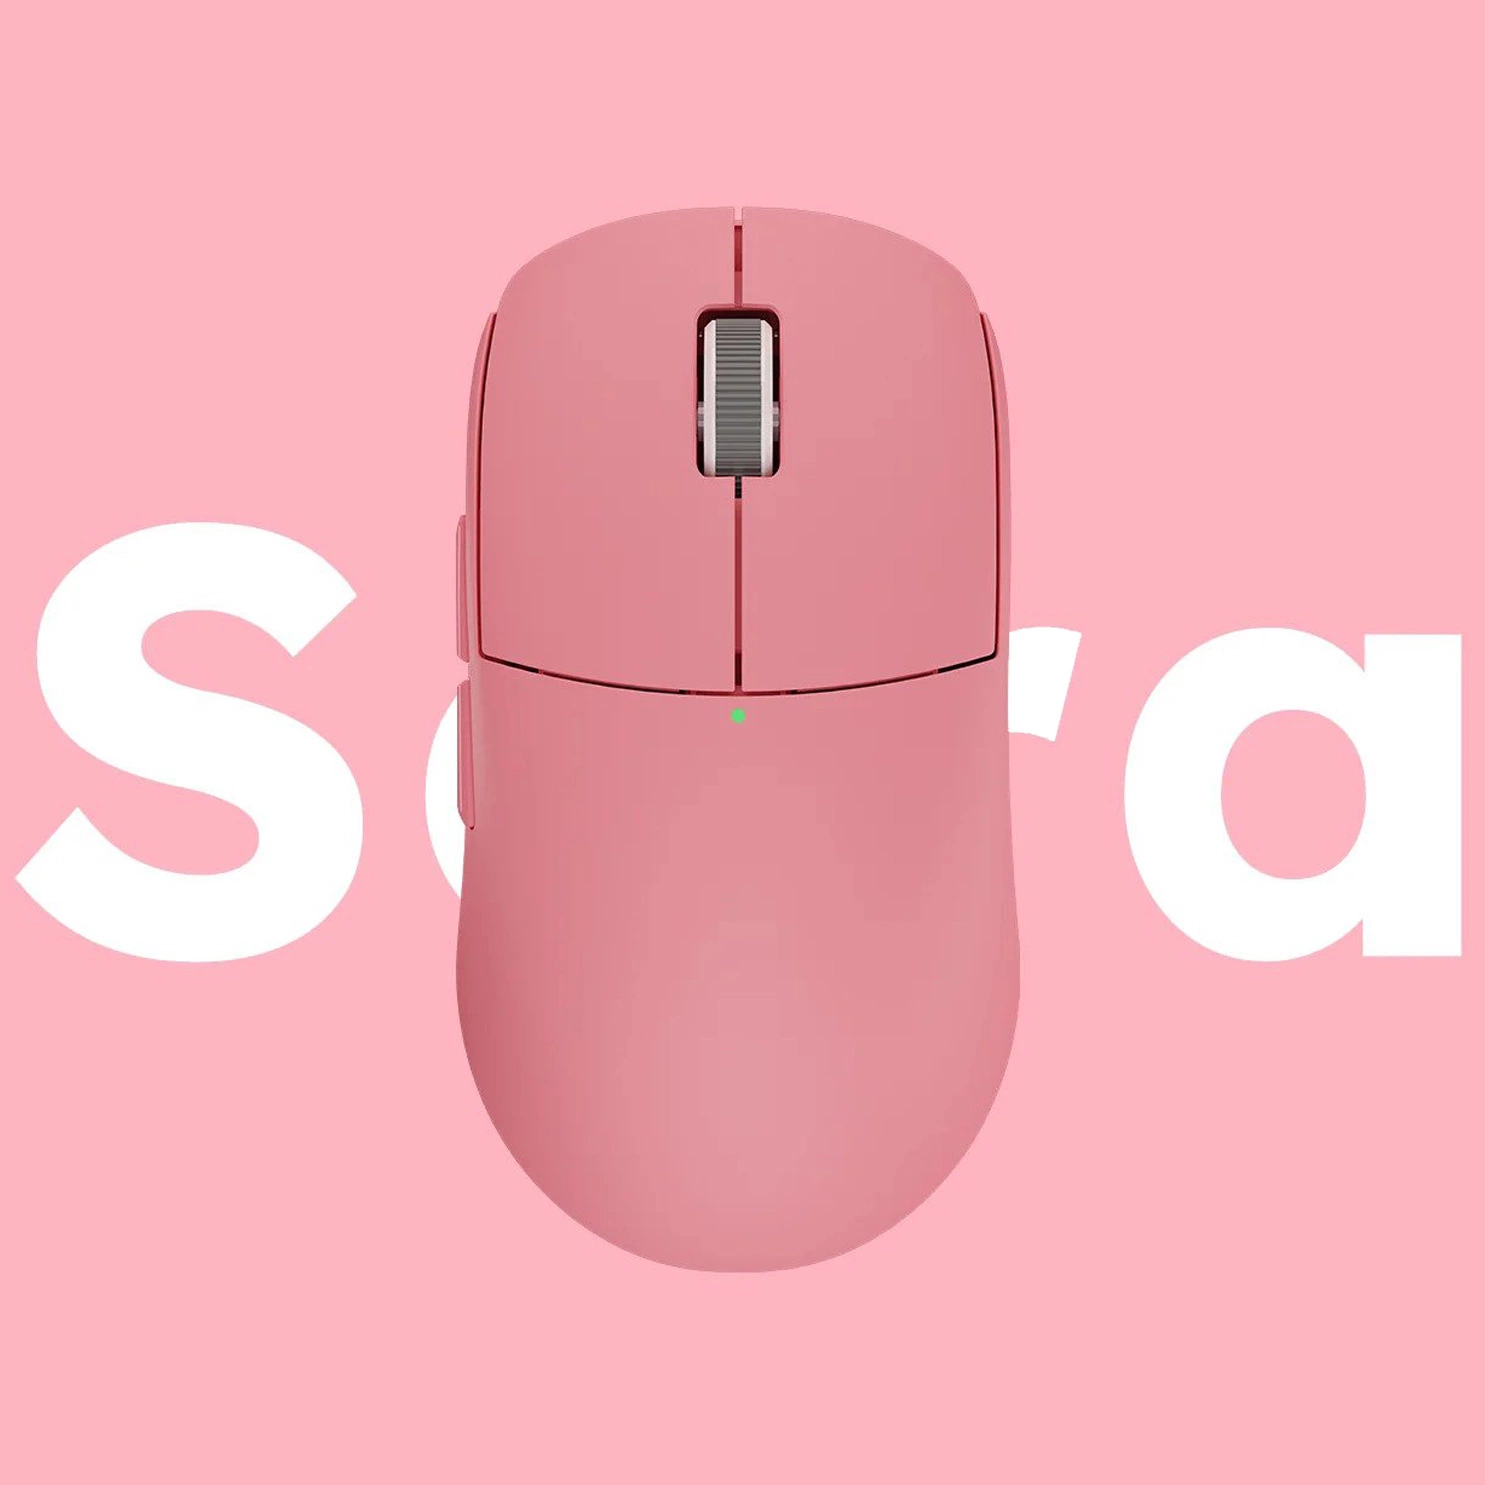 Ninjutso Sora Wireless Gaming Mouse - Pink Limited Edition